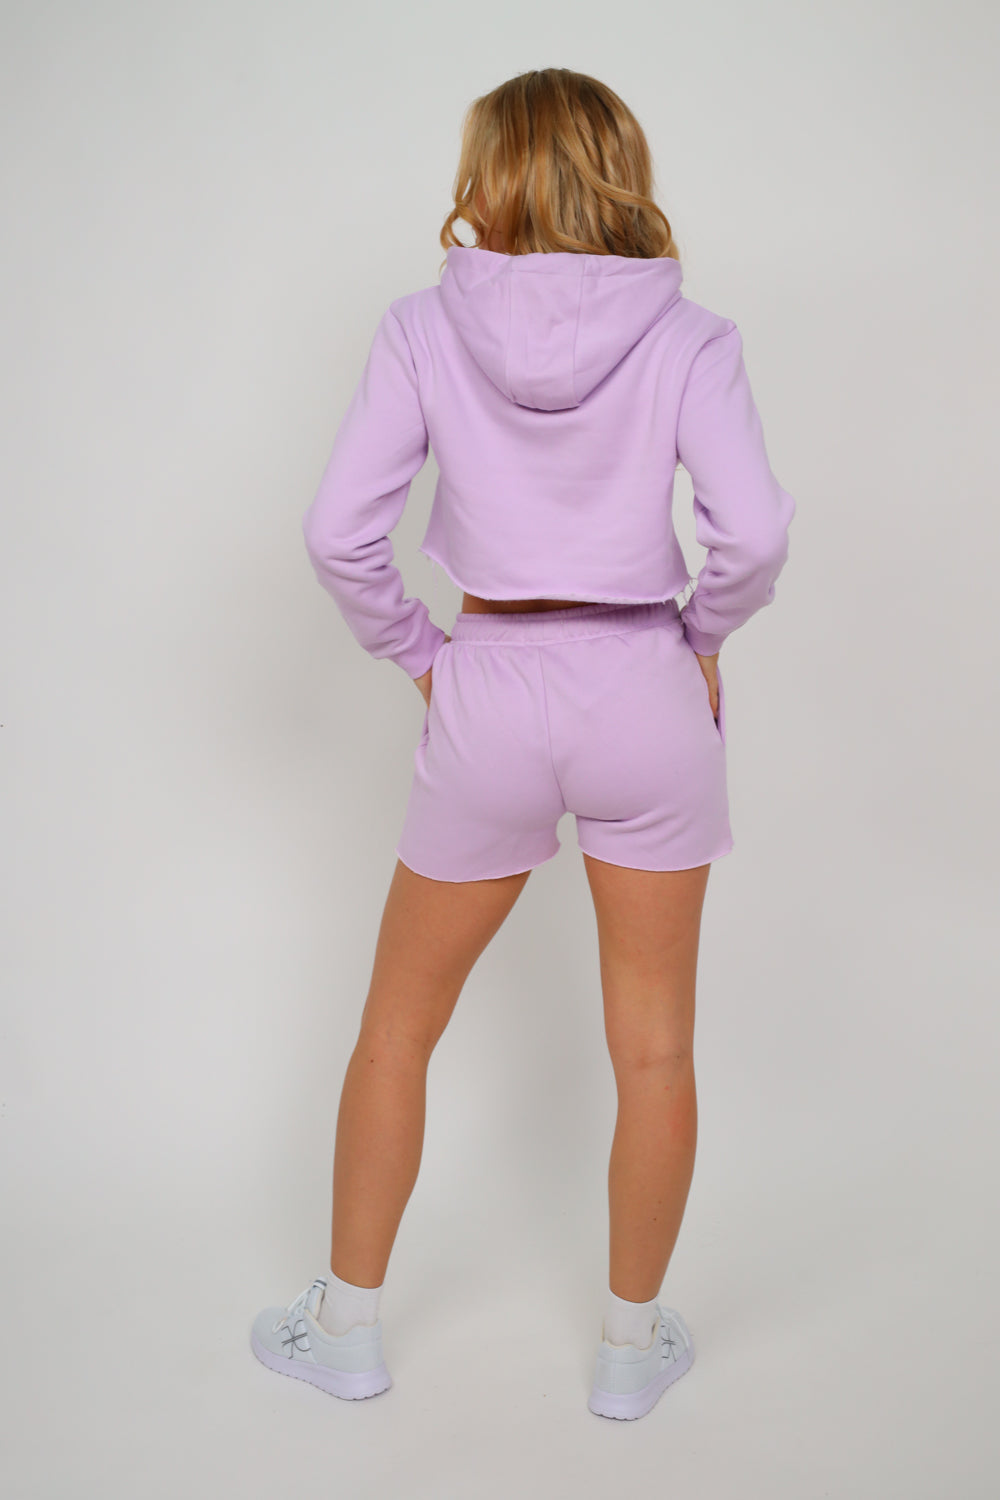 Validate Amesthyst Pink Phoebe Hoodie | Validate Fashion Hoodies & Sweatshirts | Hertfordshire